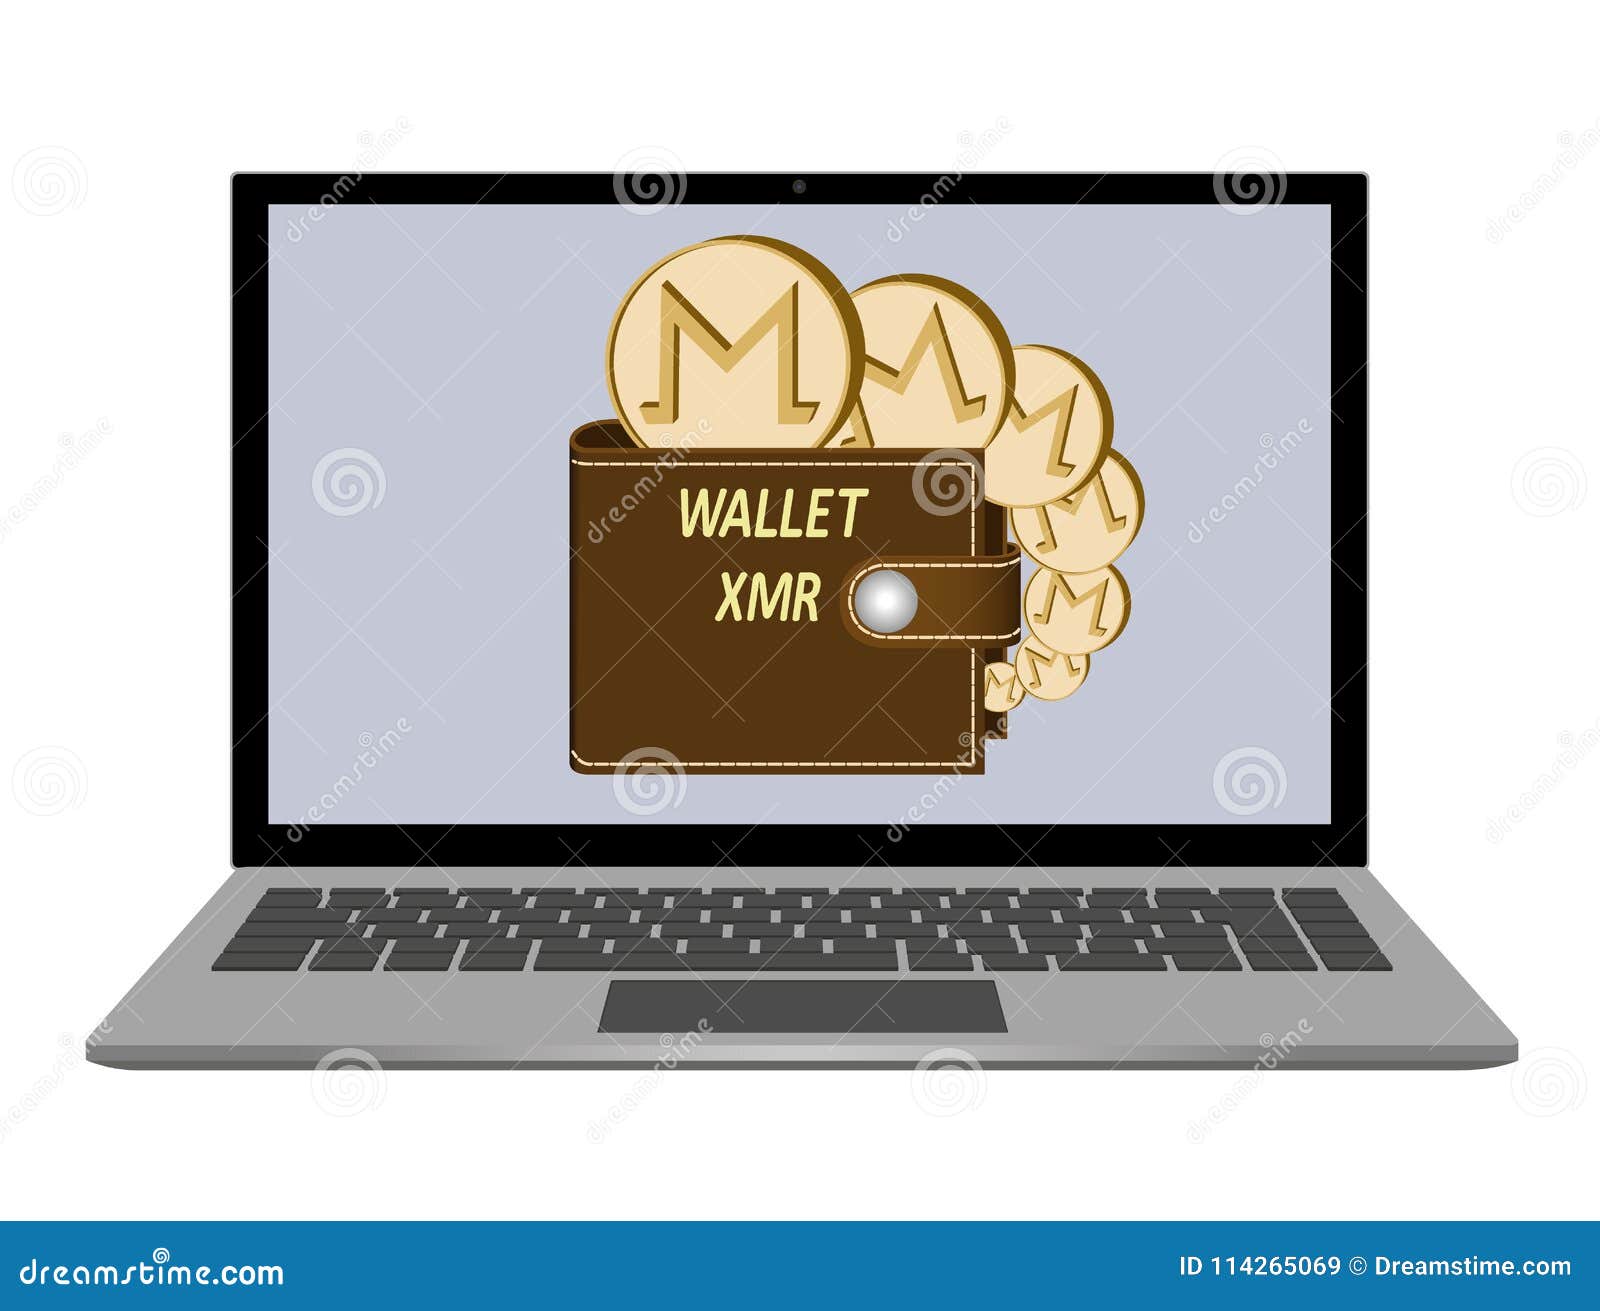 Mejor wallet monero digital биткоин кран на андроид отзывы